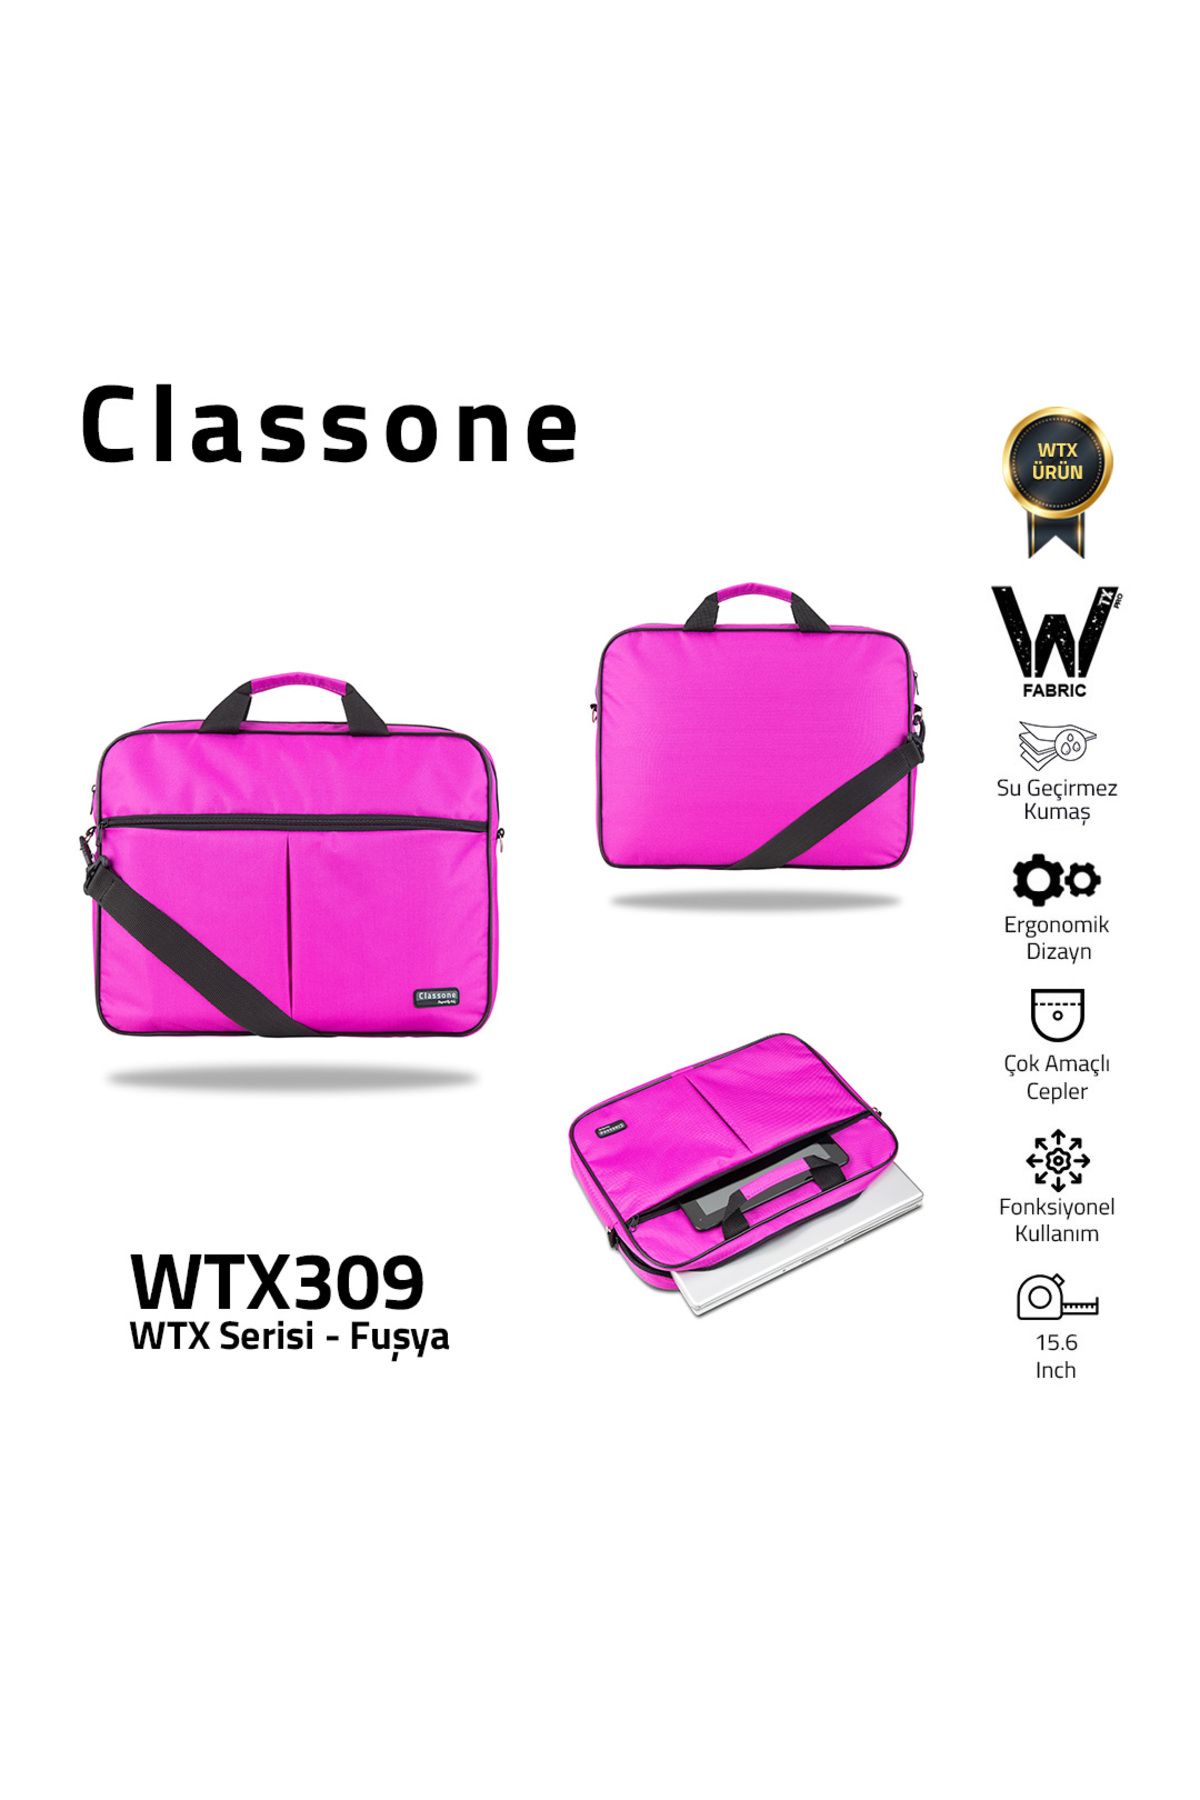 Classone Wtx309 Wtxpro serisi 15.6 Inch Uyumlu Su Geçirmez Kumaş , Laptop , Notebook El Çantası- Fuşya